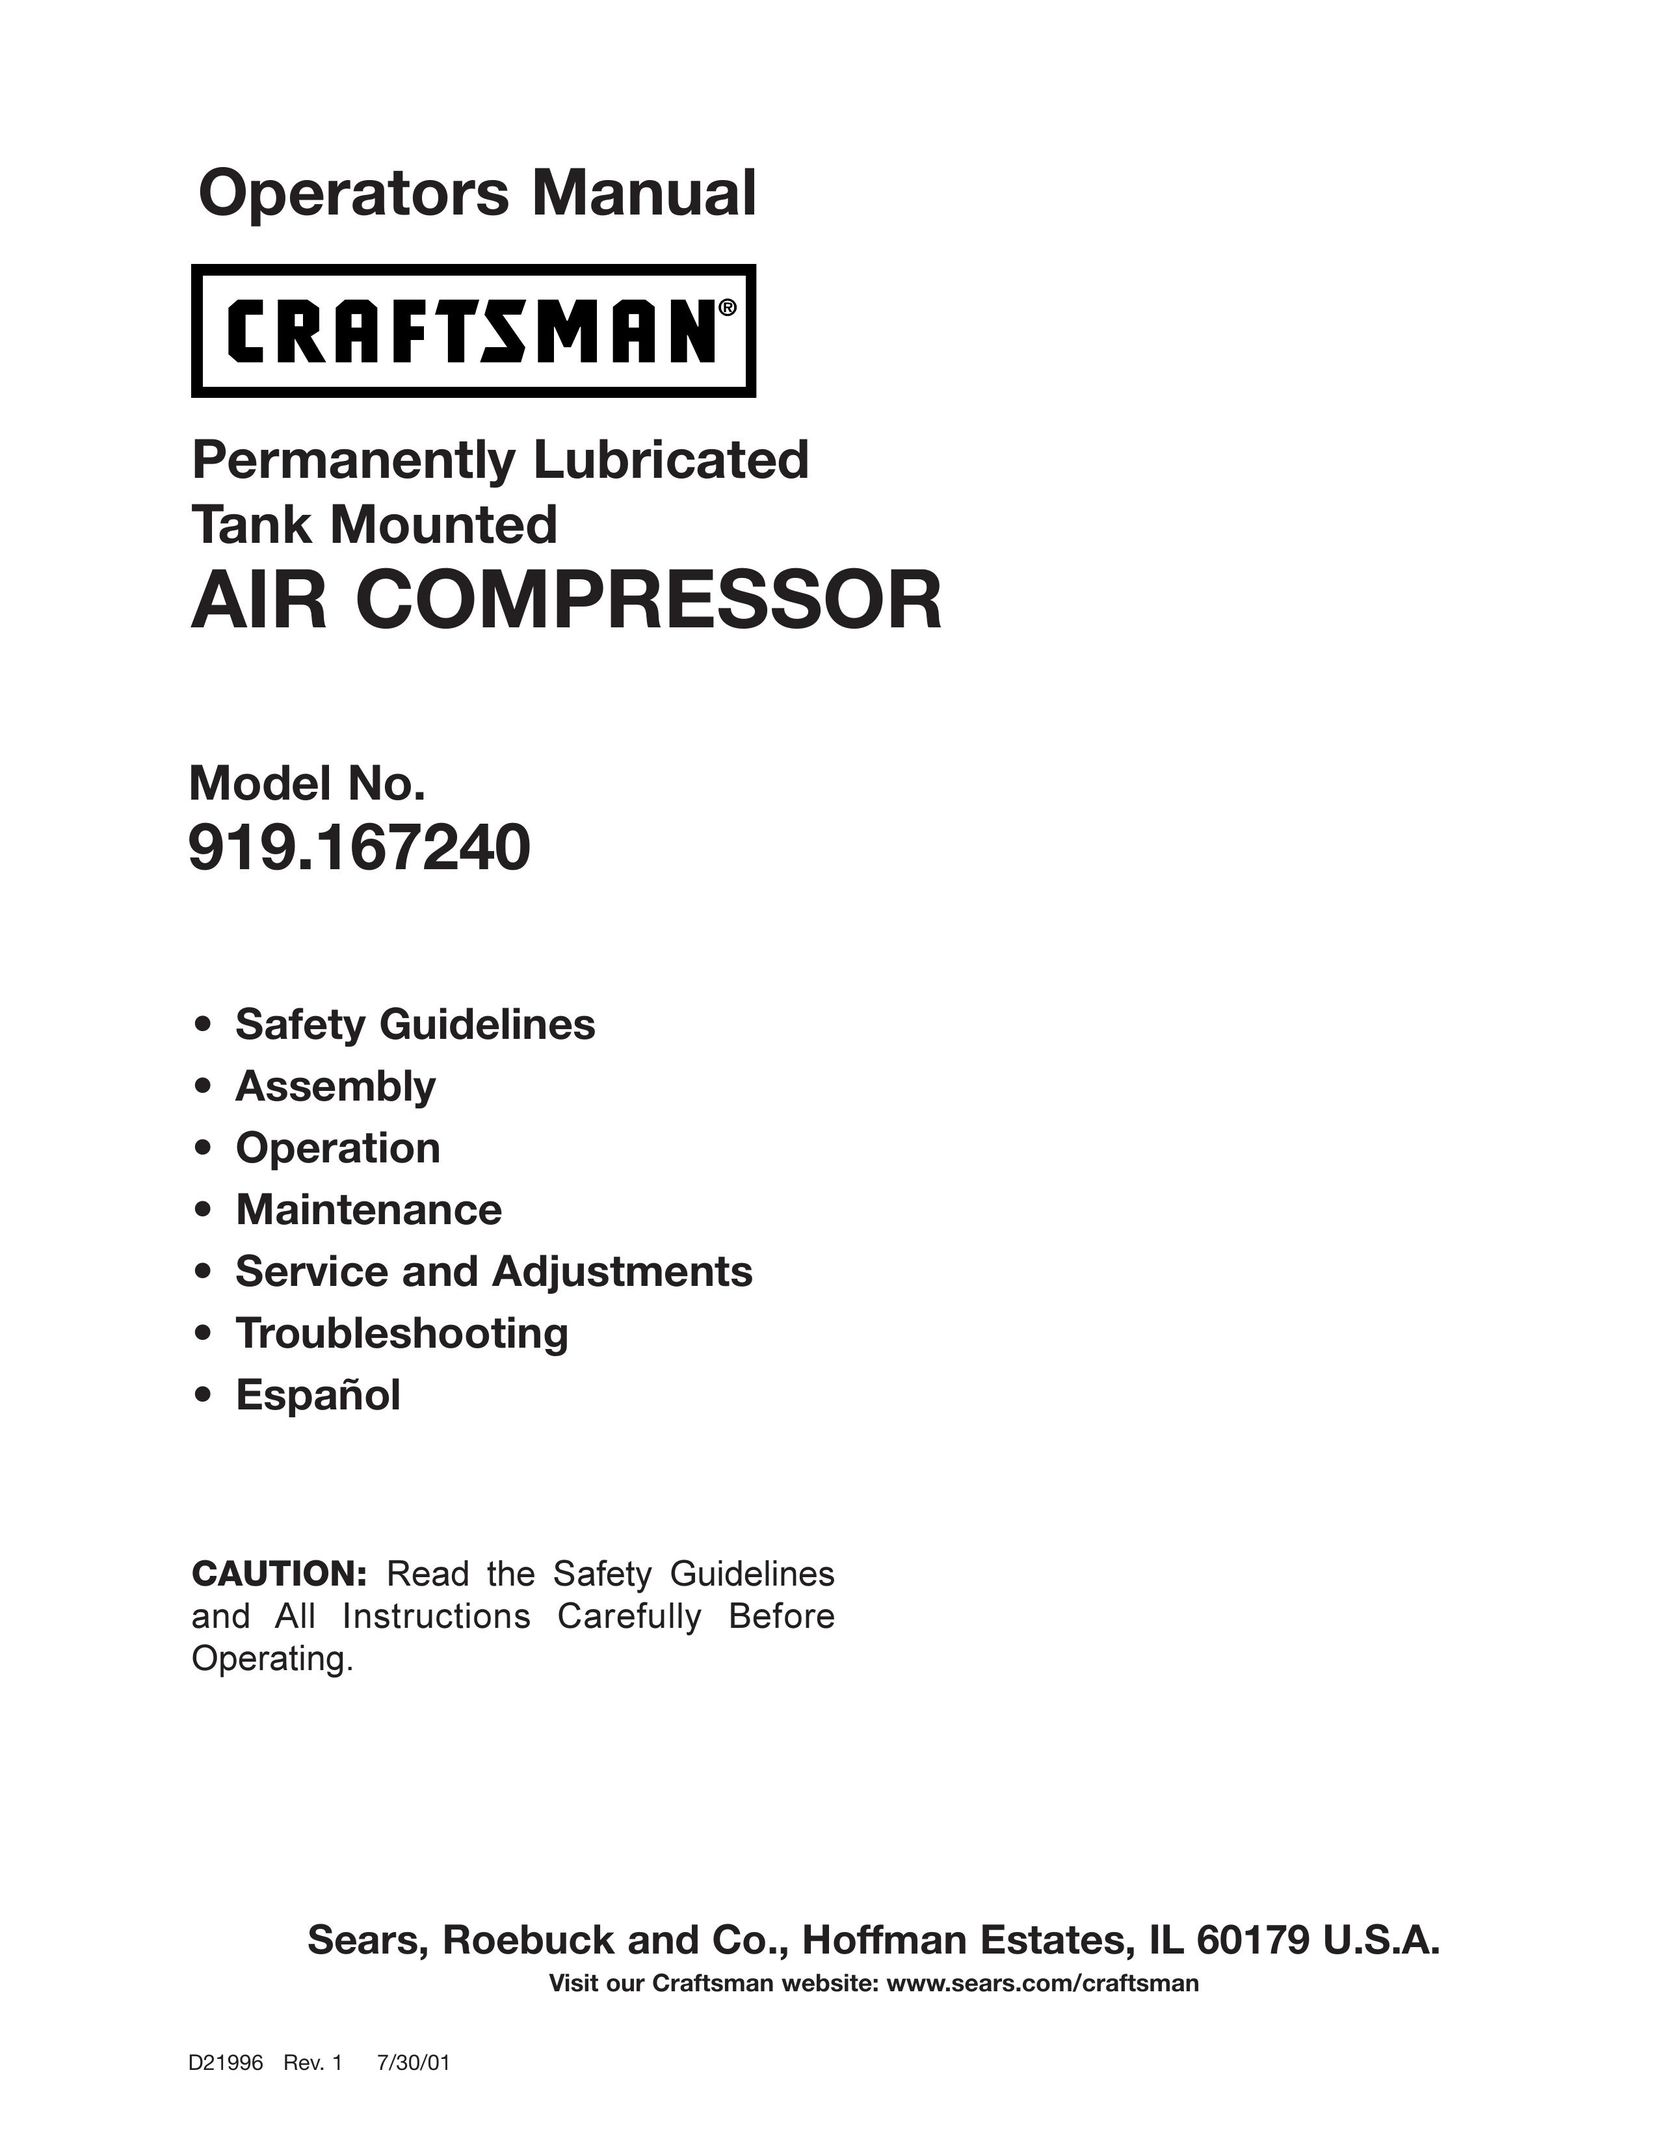 Craftsman 919.16724 Air Compressor User Manual